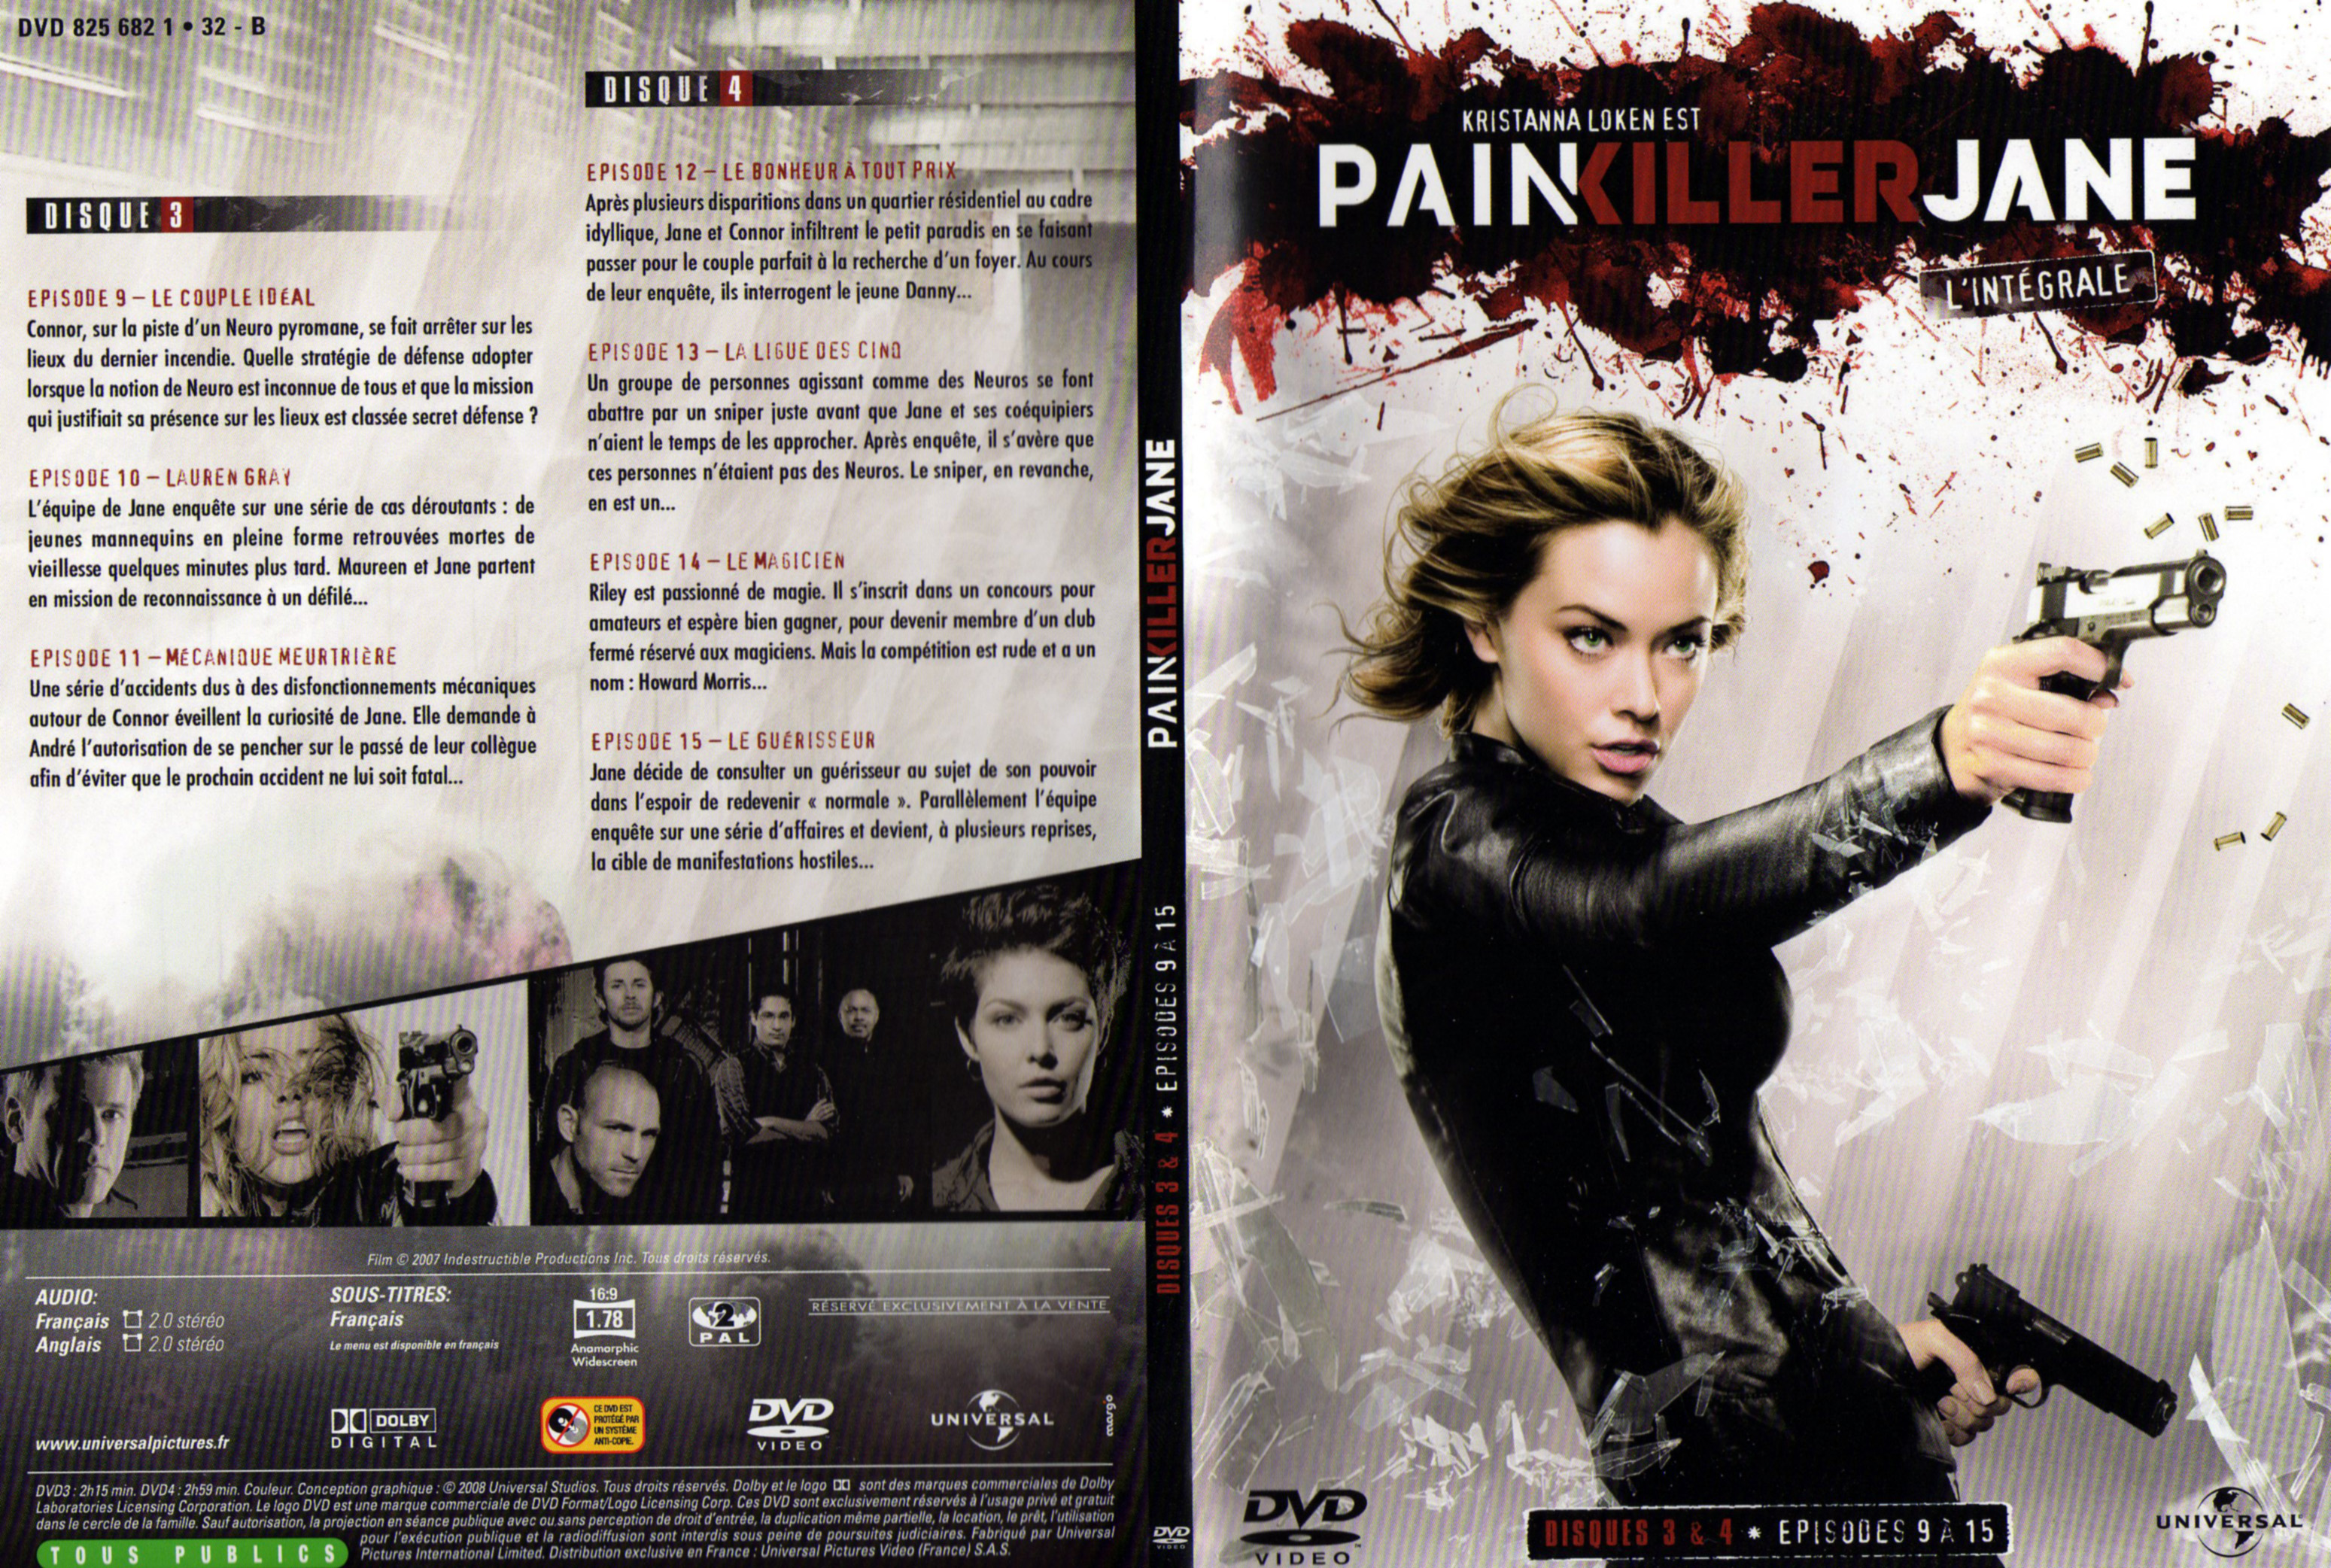 Jaquette DVD Painkiller Jane Saison 1 DVD 2